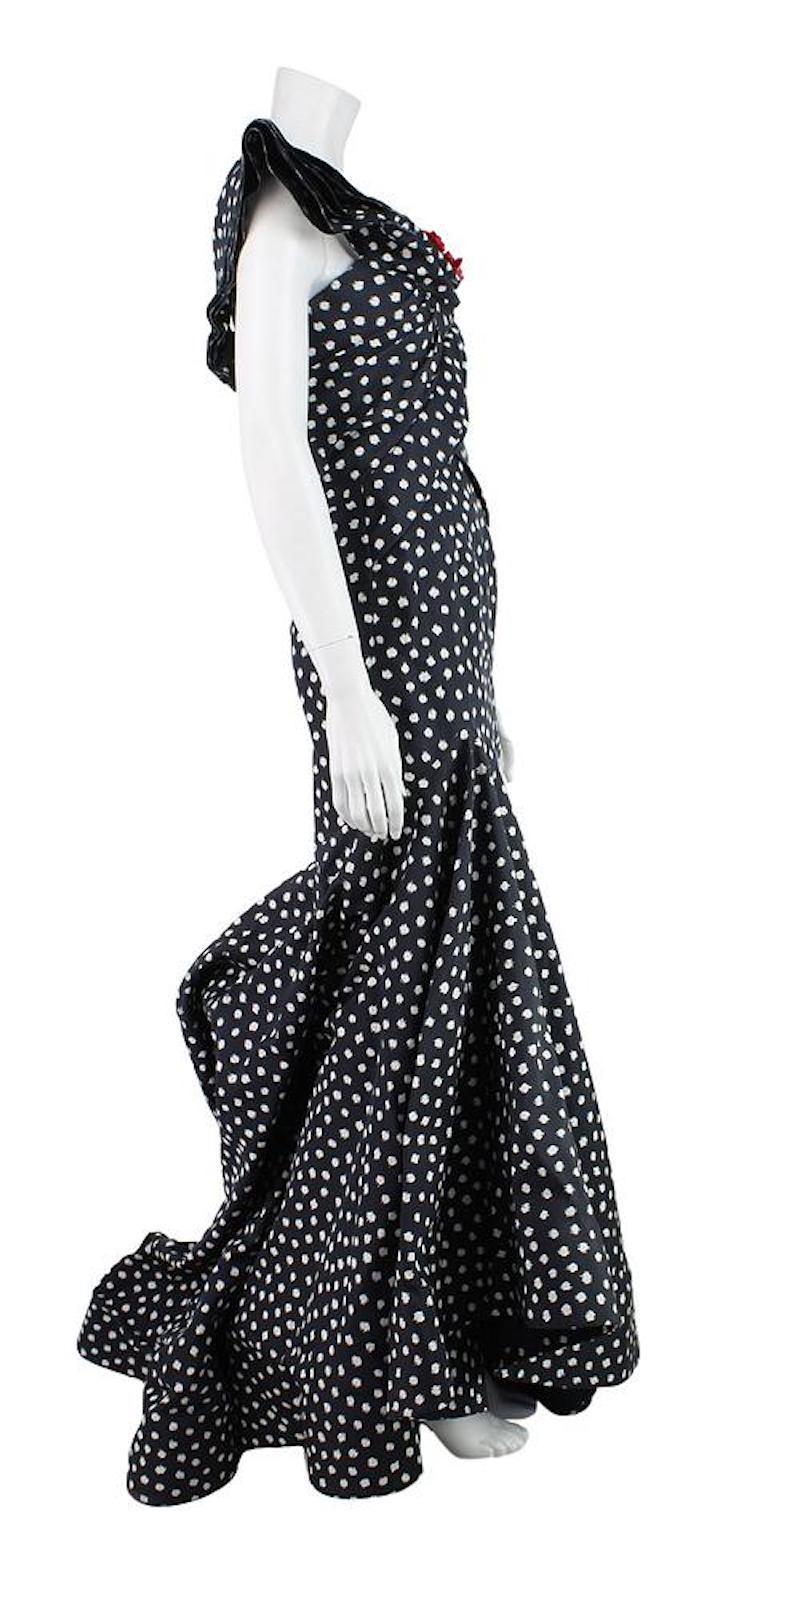 Oscar de la Renta One Shoulder Asymmetric Polka Dot Gown
Material: Silk
Color: Navy Blue
Size: US -2
Made in USAs
Excellent condition